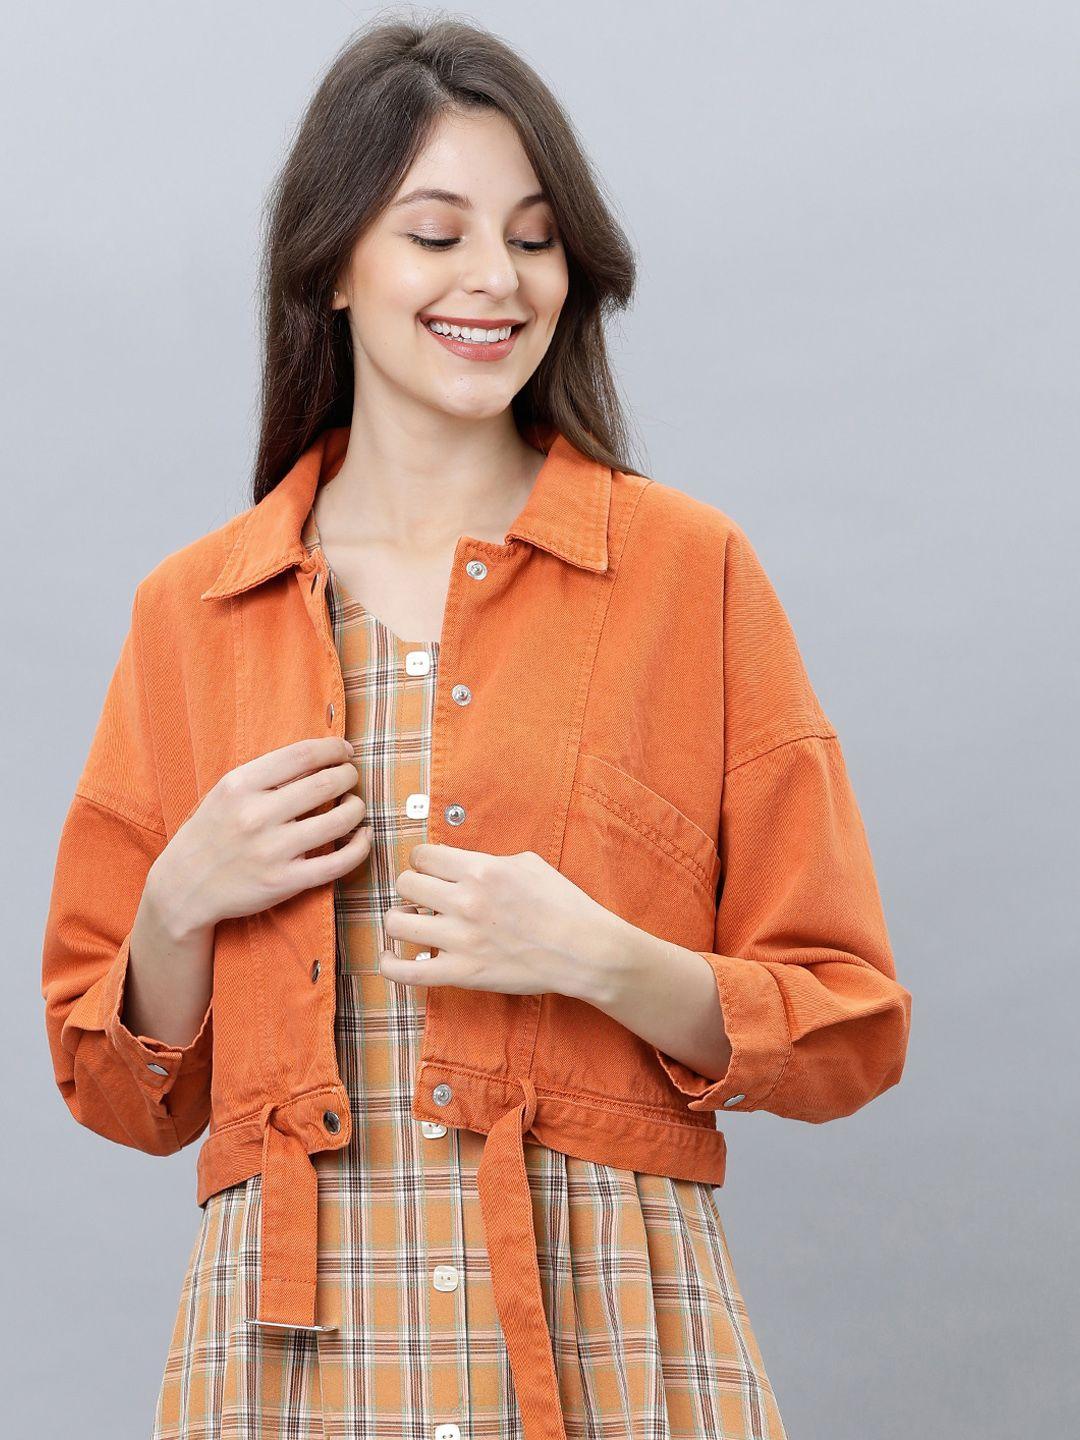 tokyo talkies women orange solid denim jacket